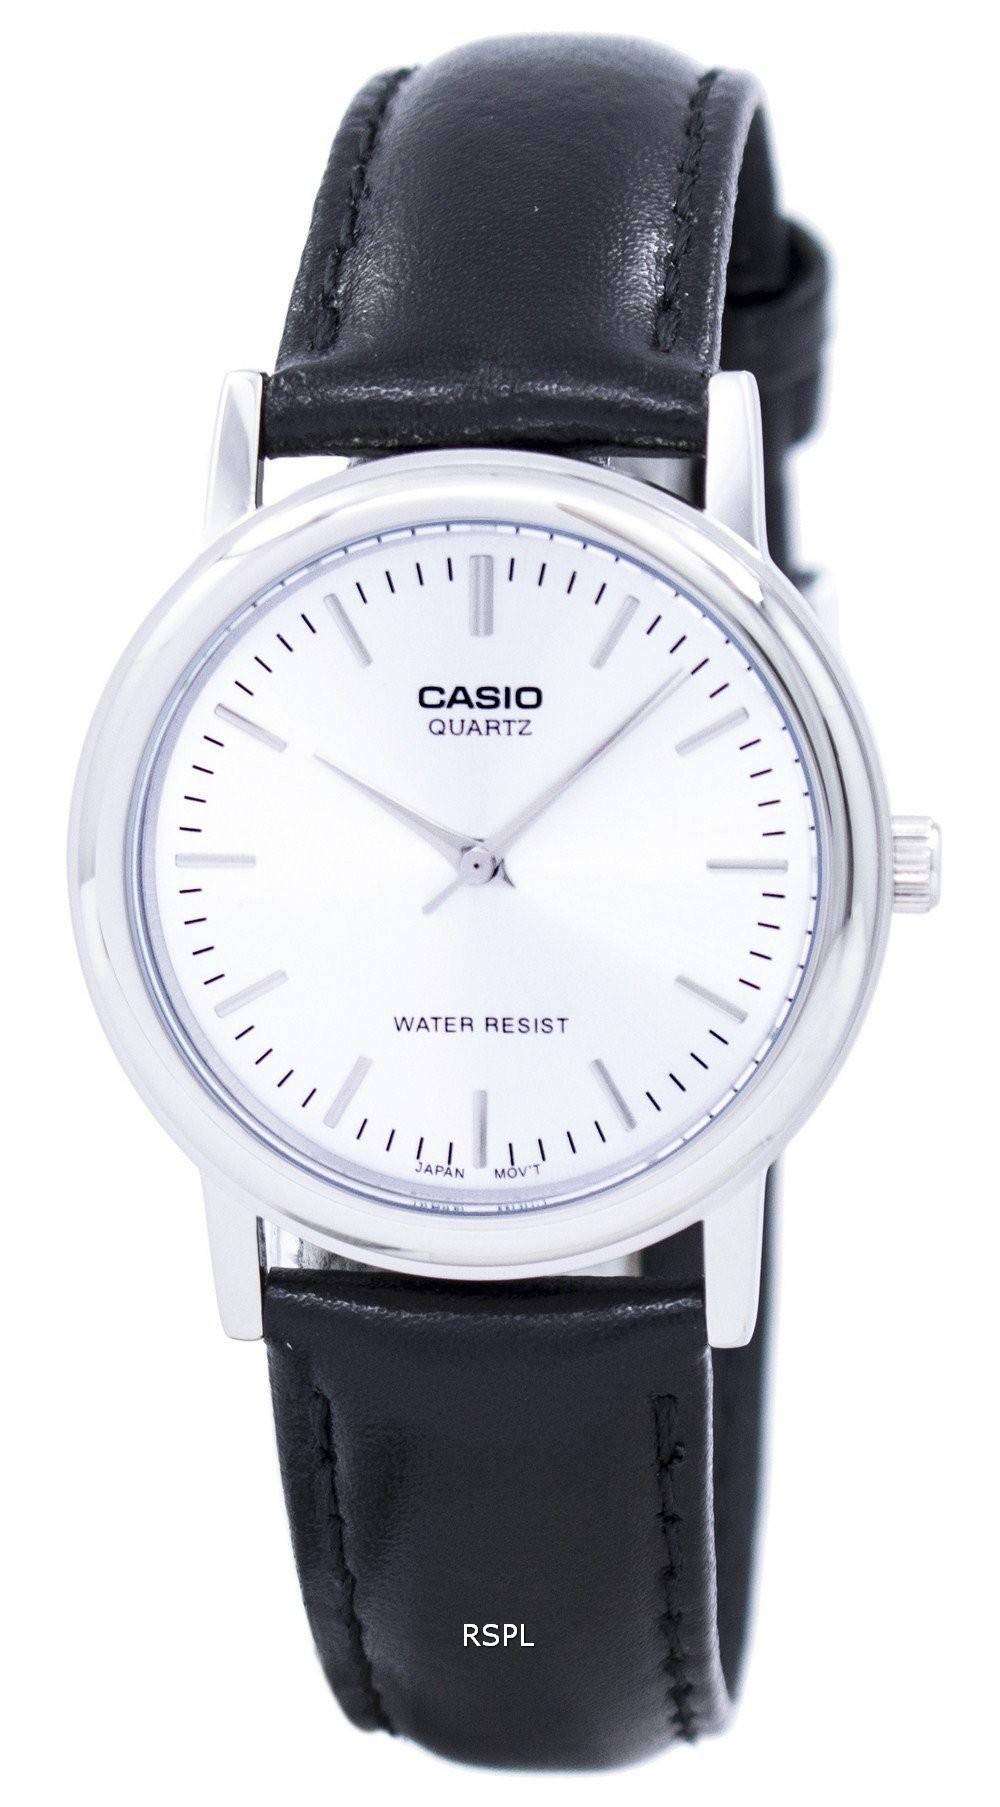 casio quartz watch instructions